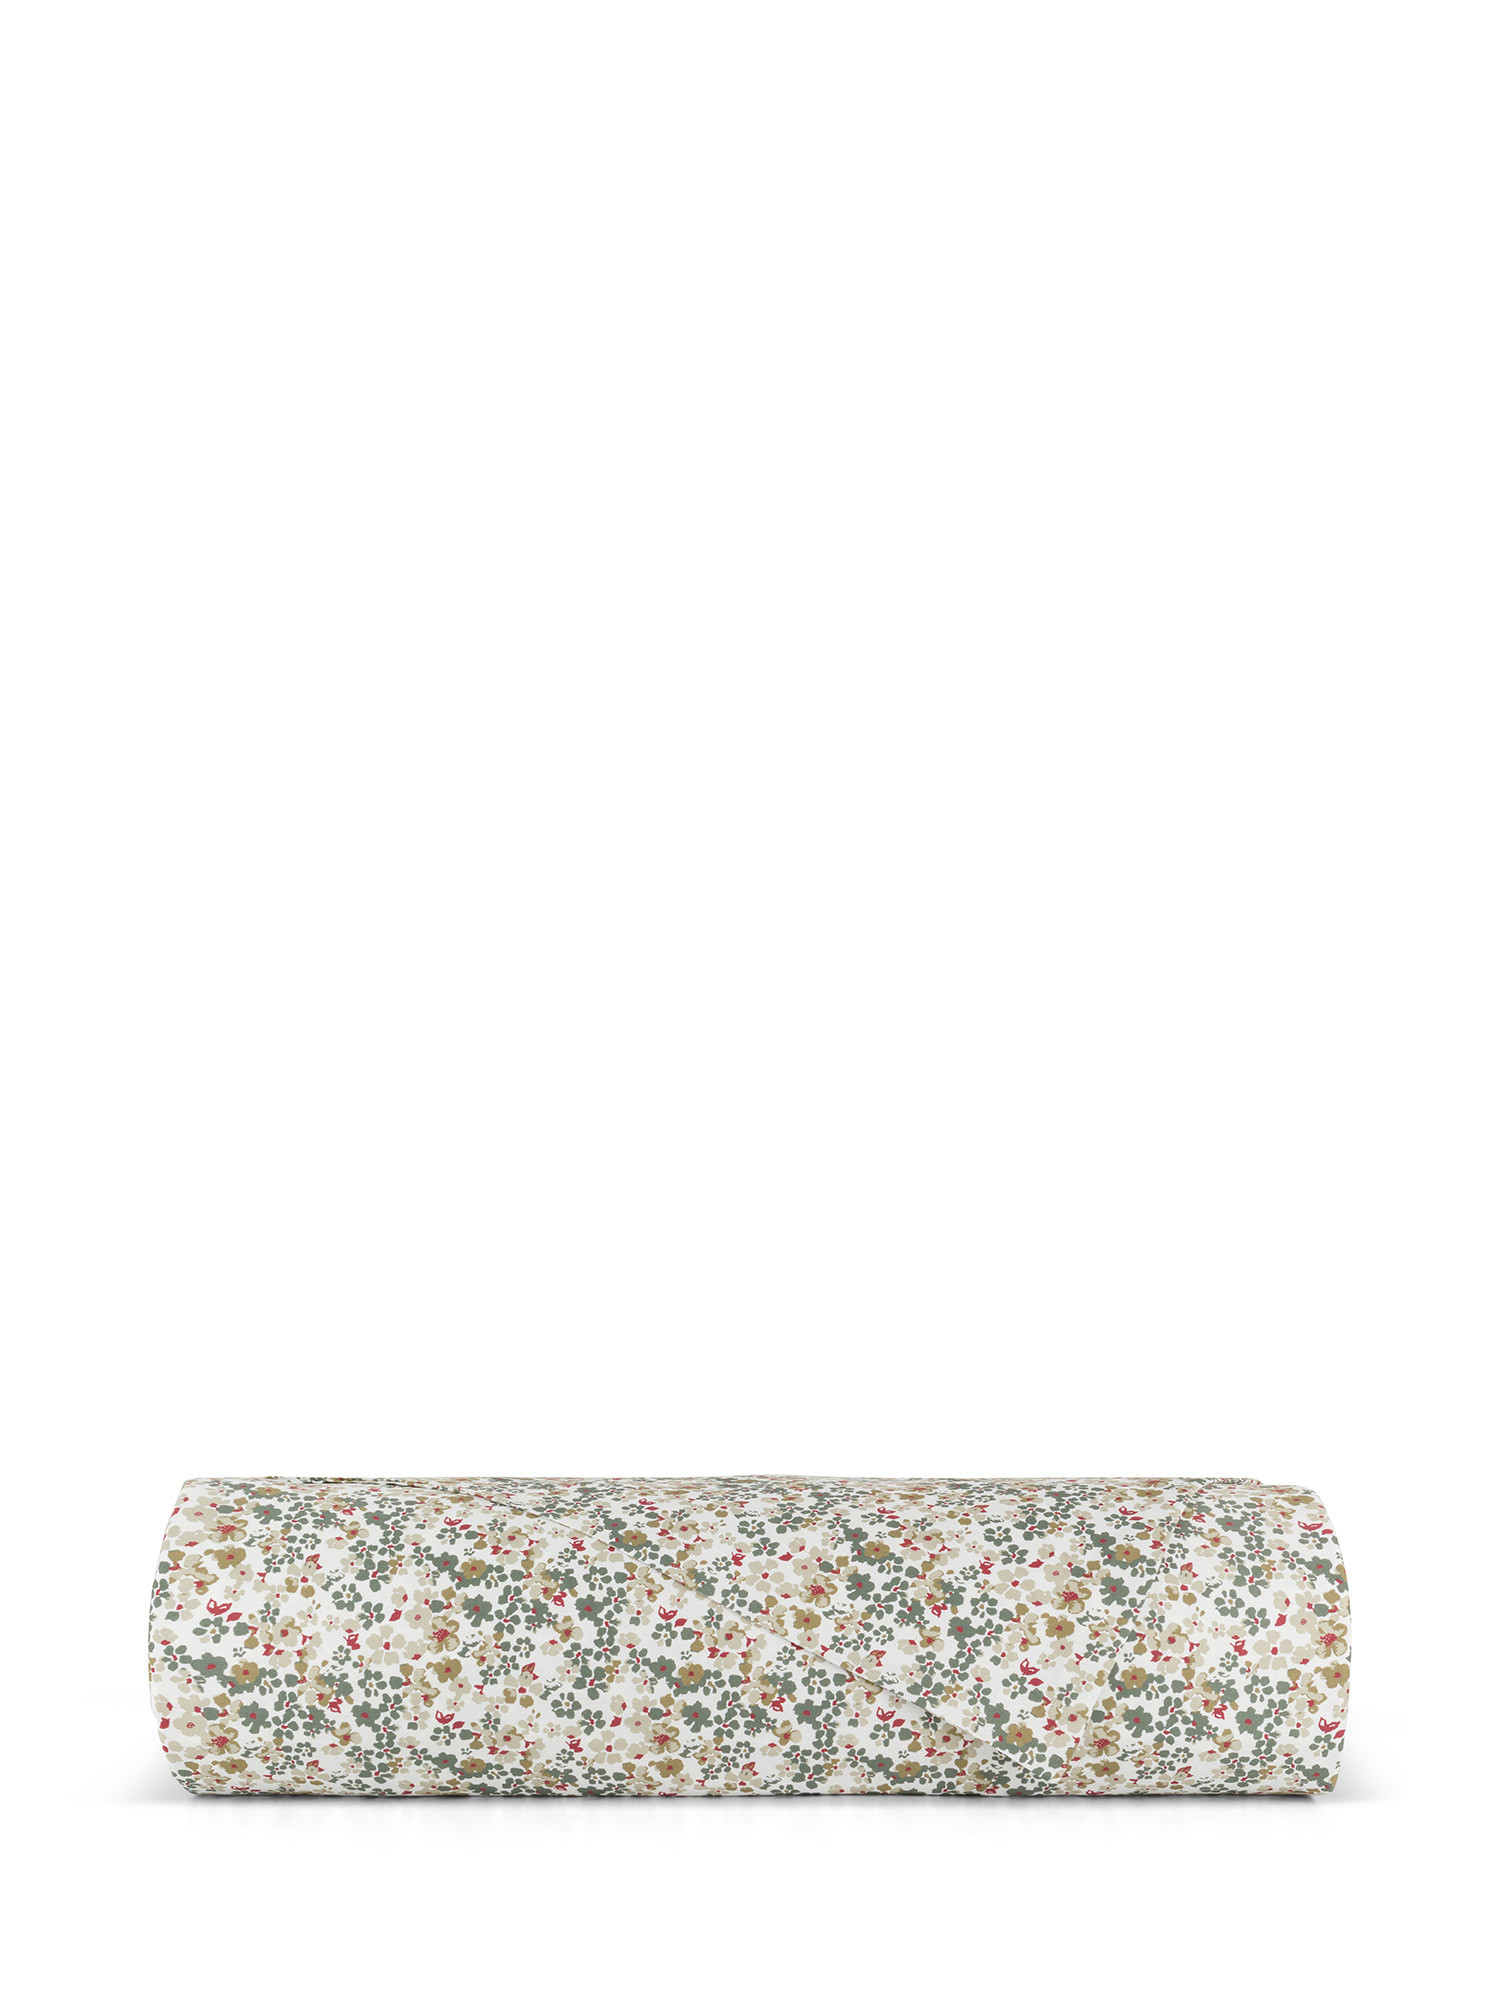 Floral patterned cotton satin duvet cover, Multicolor, large image number 1